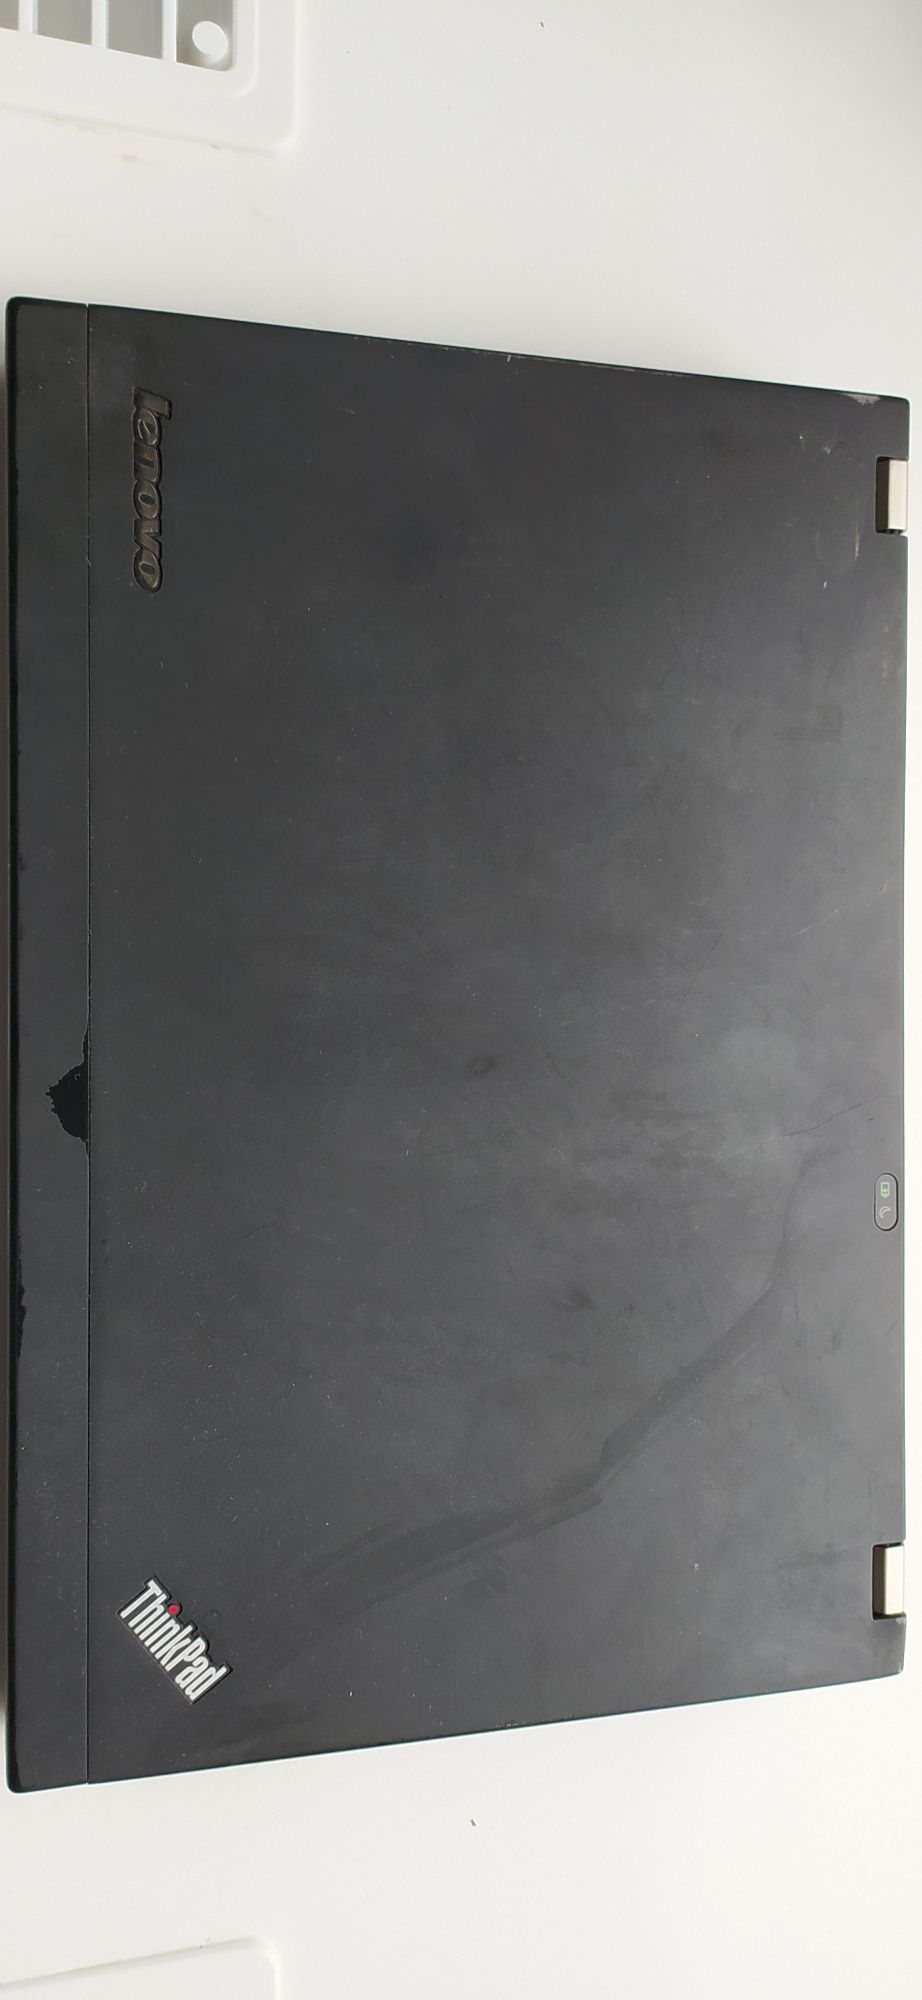 Продам ноутбук Lenovo i5 ThinkPad x230 / Леново х230